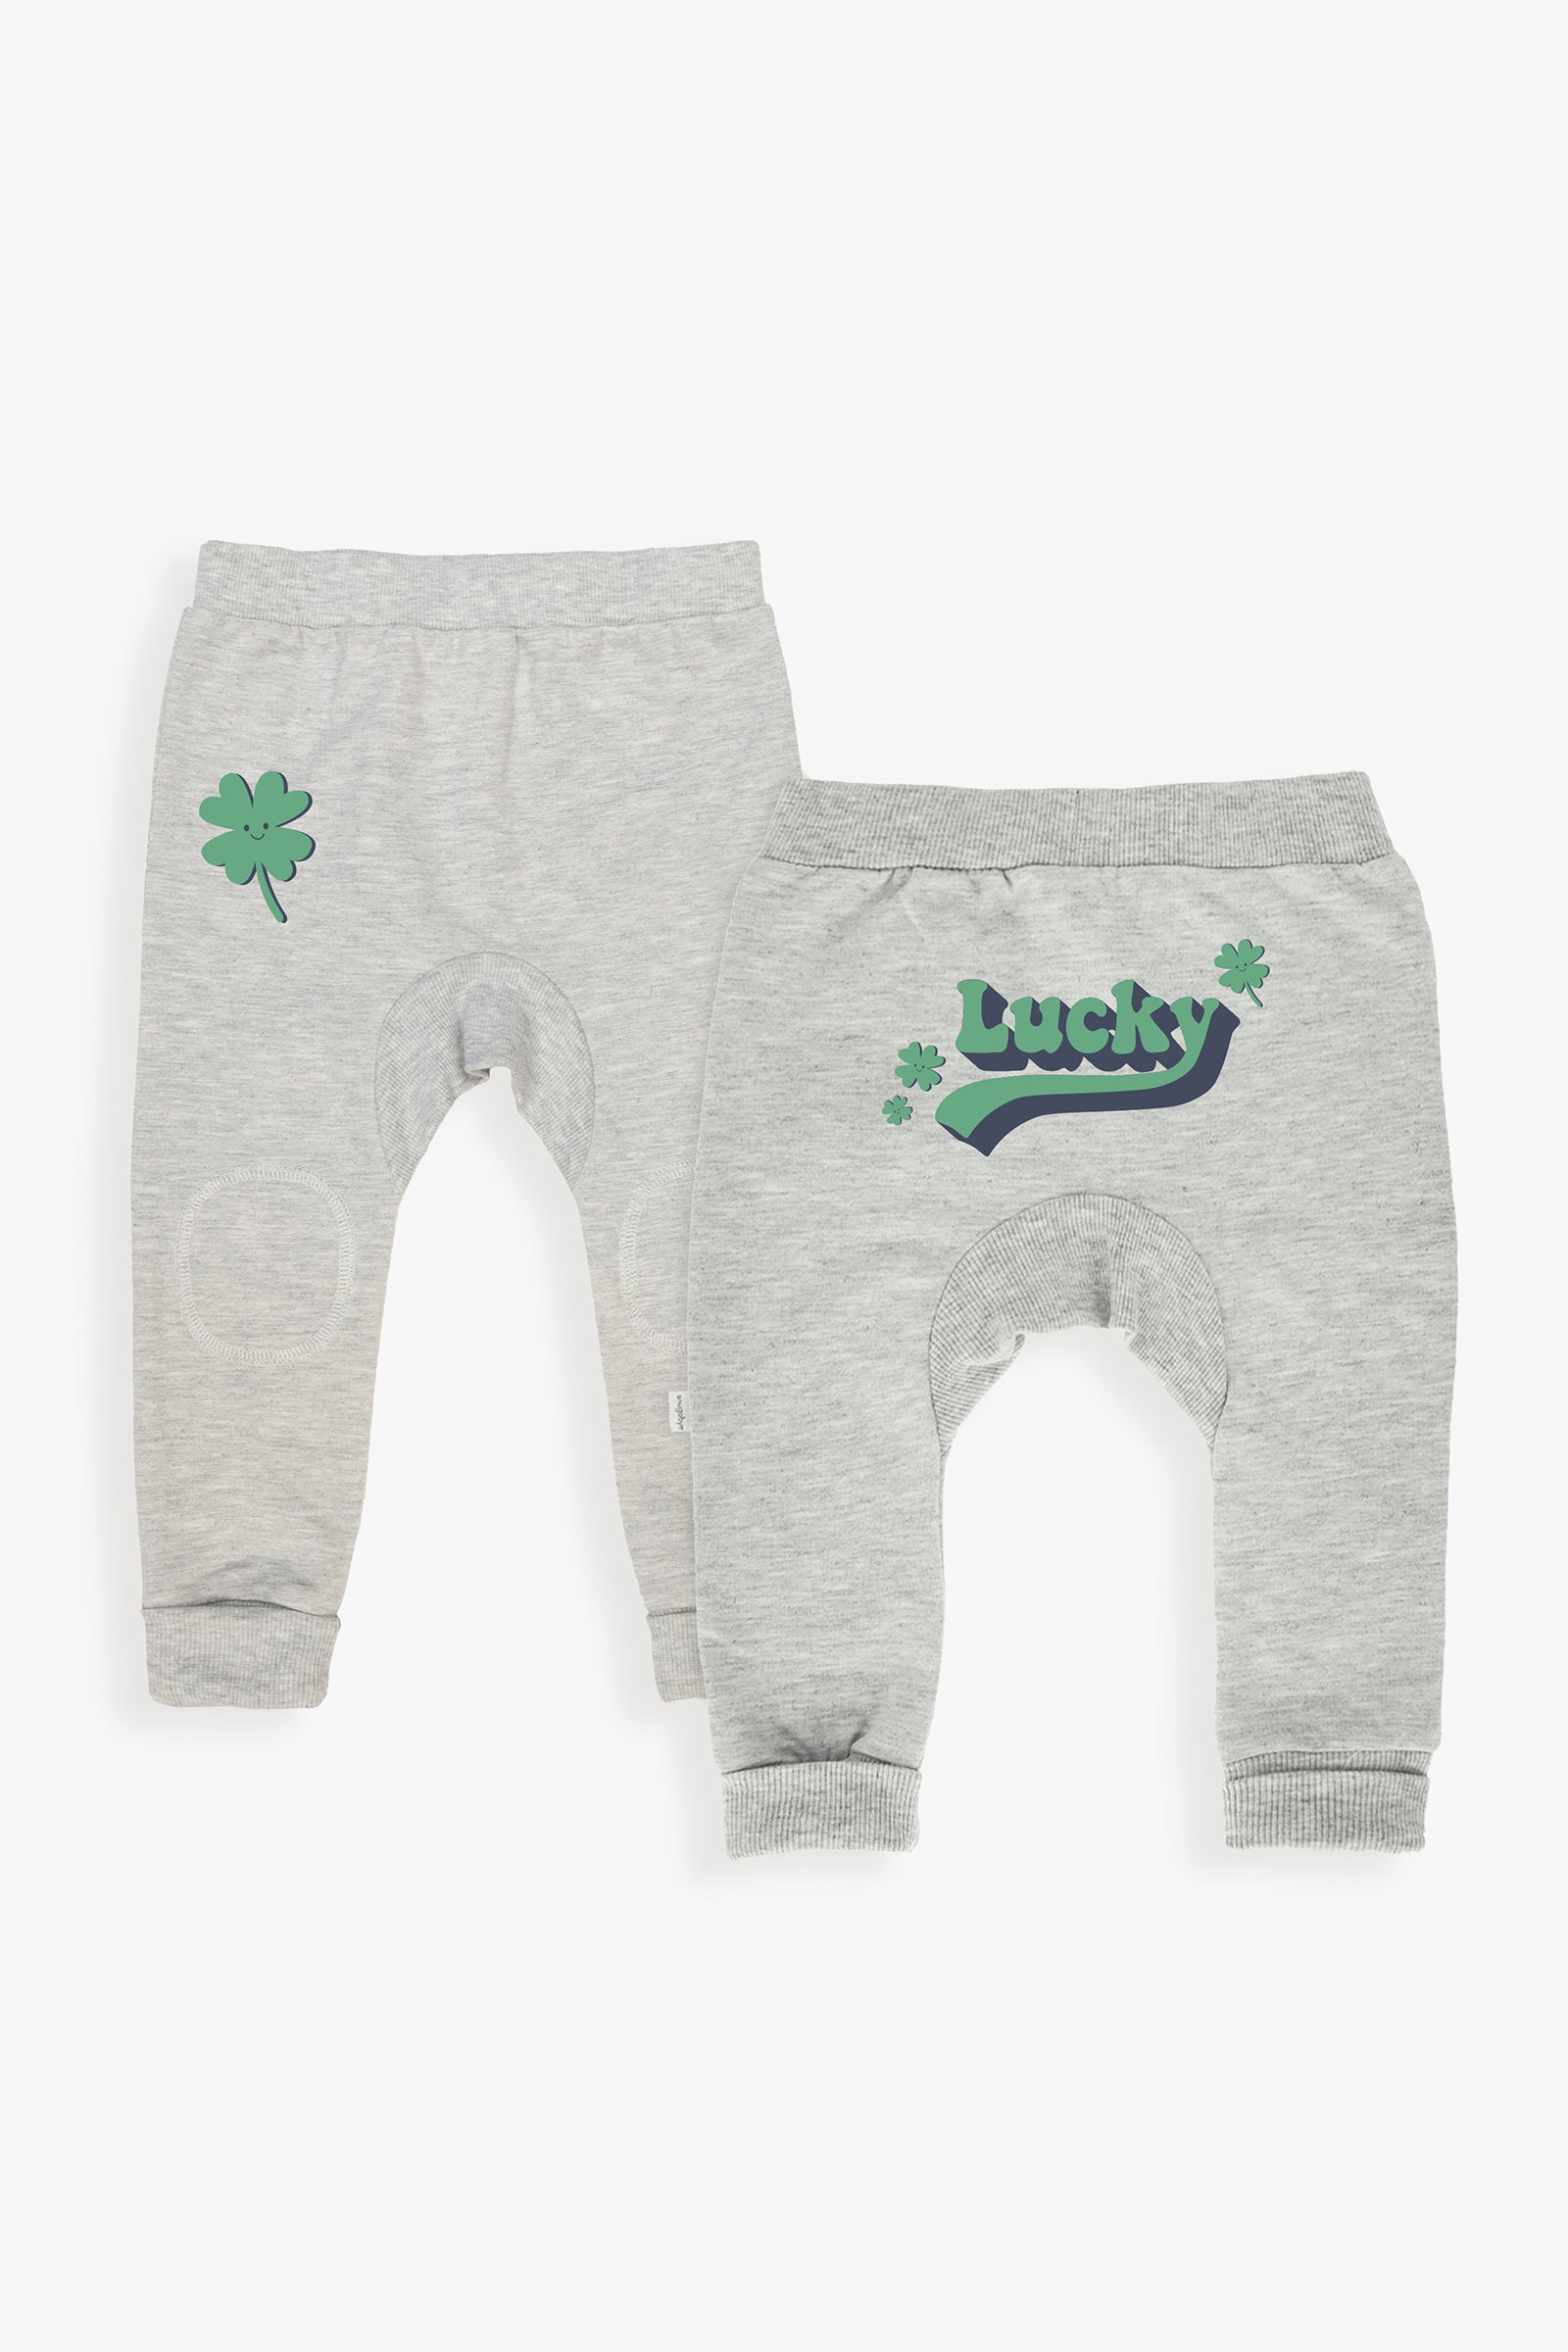 Snugabye St. Patrick's Day Irish Holiday Celebration Baby & Toddler French Terry Pants